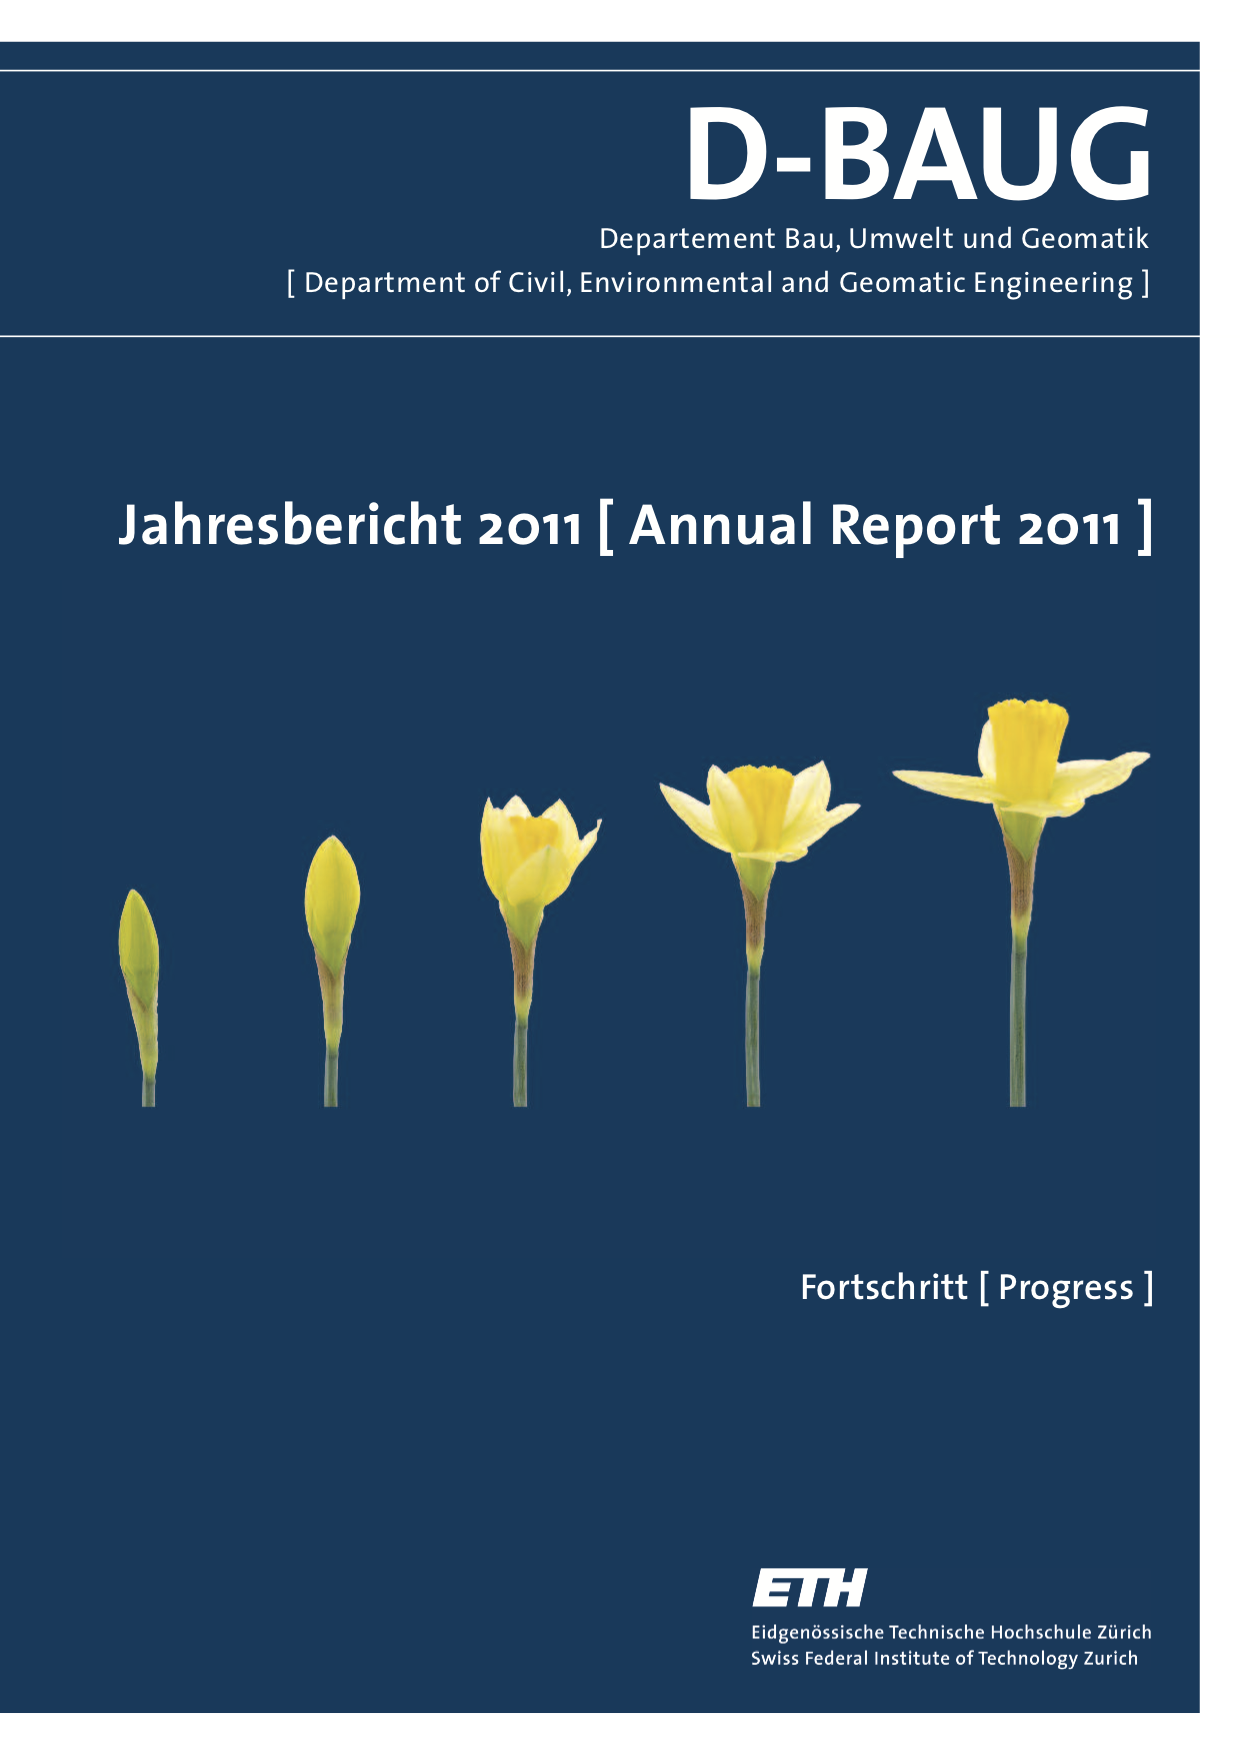 D-BAUG Jahresbericht 2011